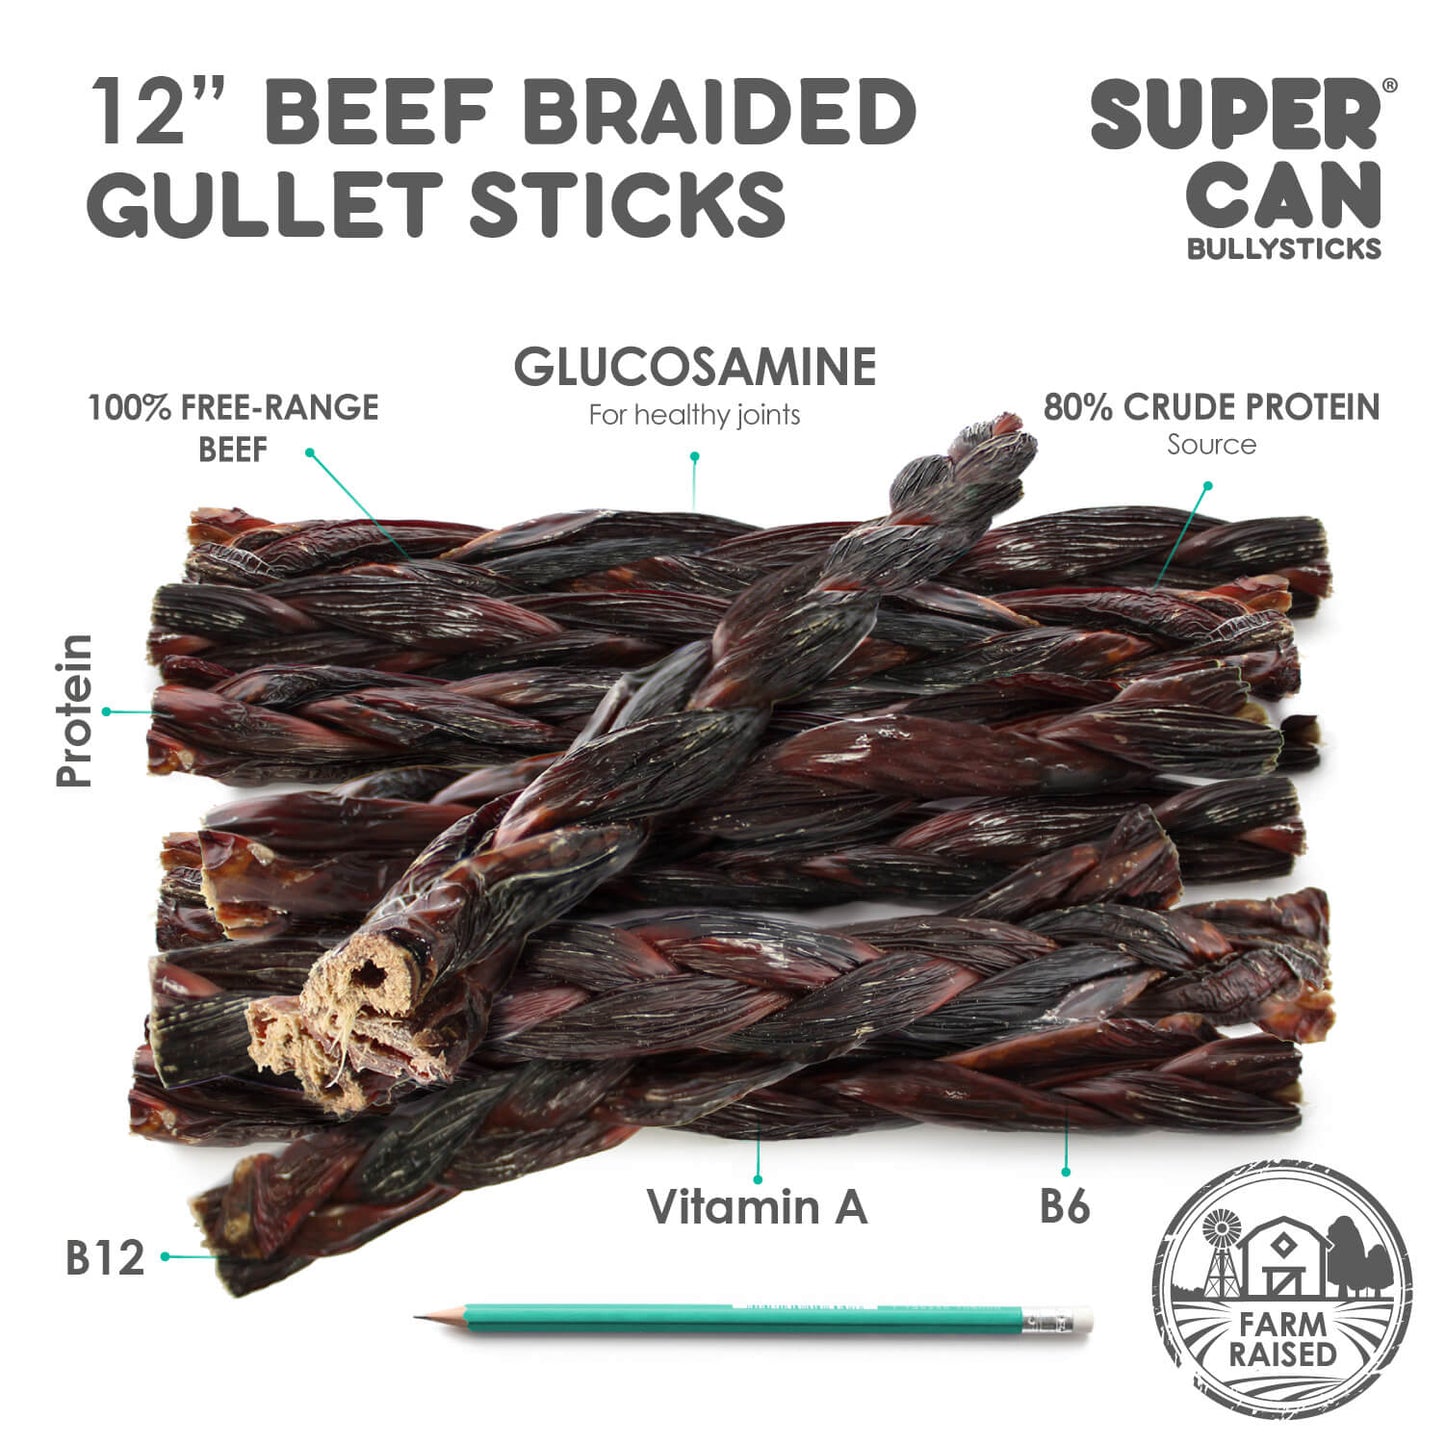 12" Beef Braided Gullet Sticks (4-Pack)